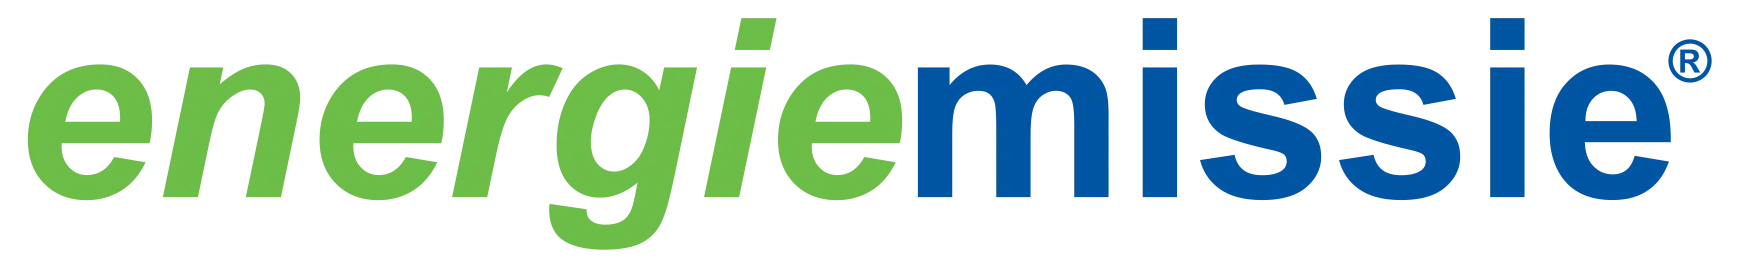 Infoplein logo